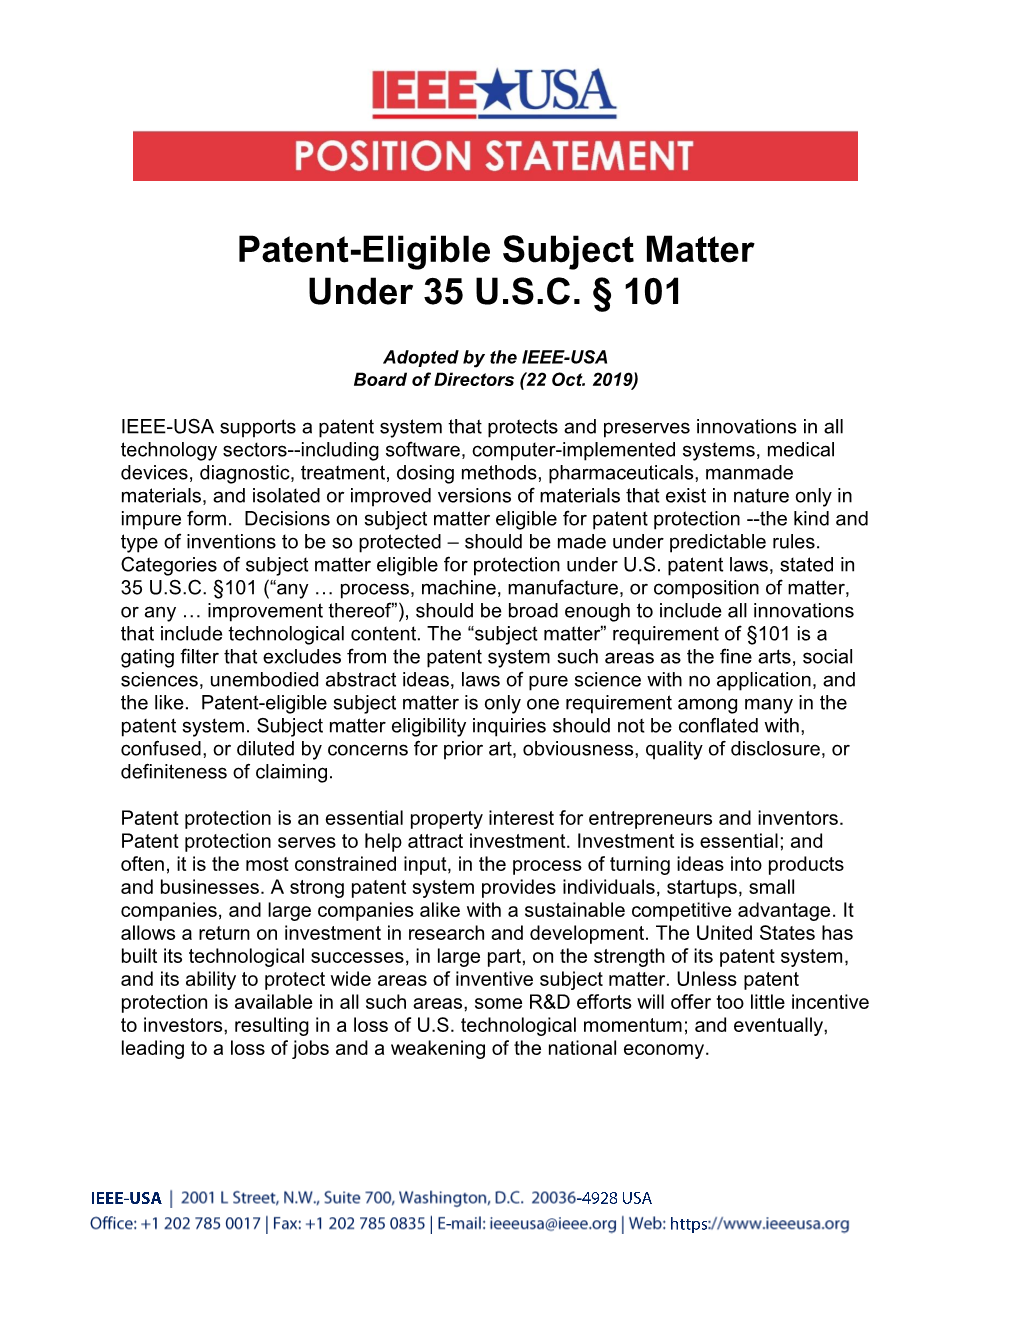 Patent-Eligible Subject Matter Under 35 U.S.C. § 101